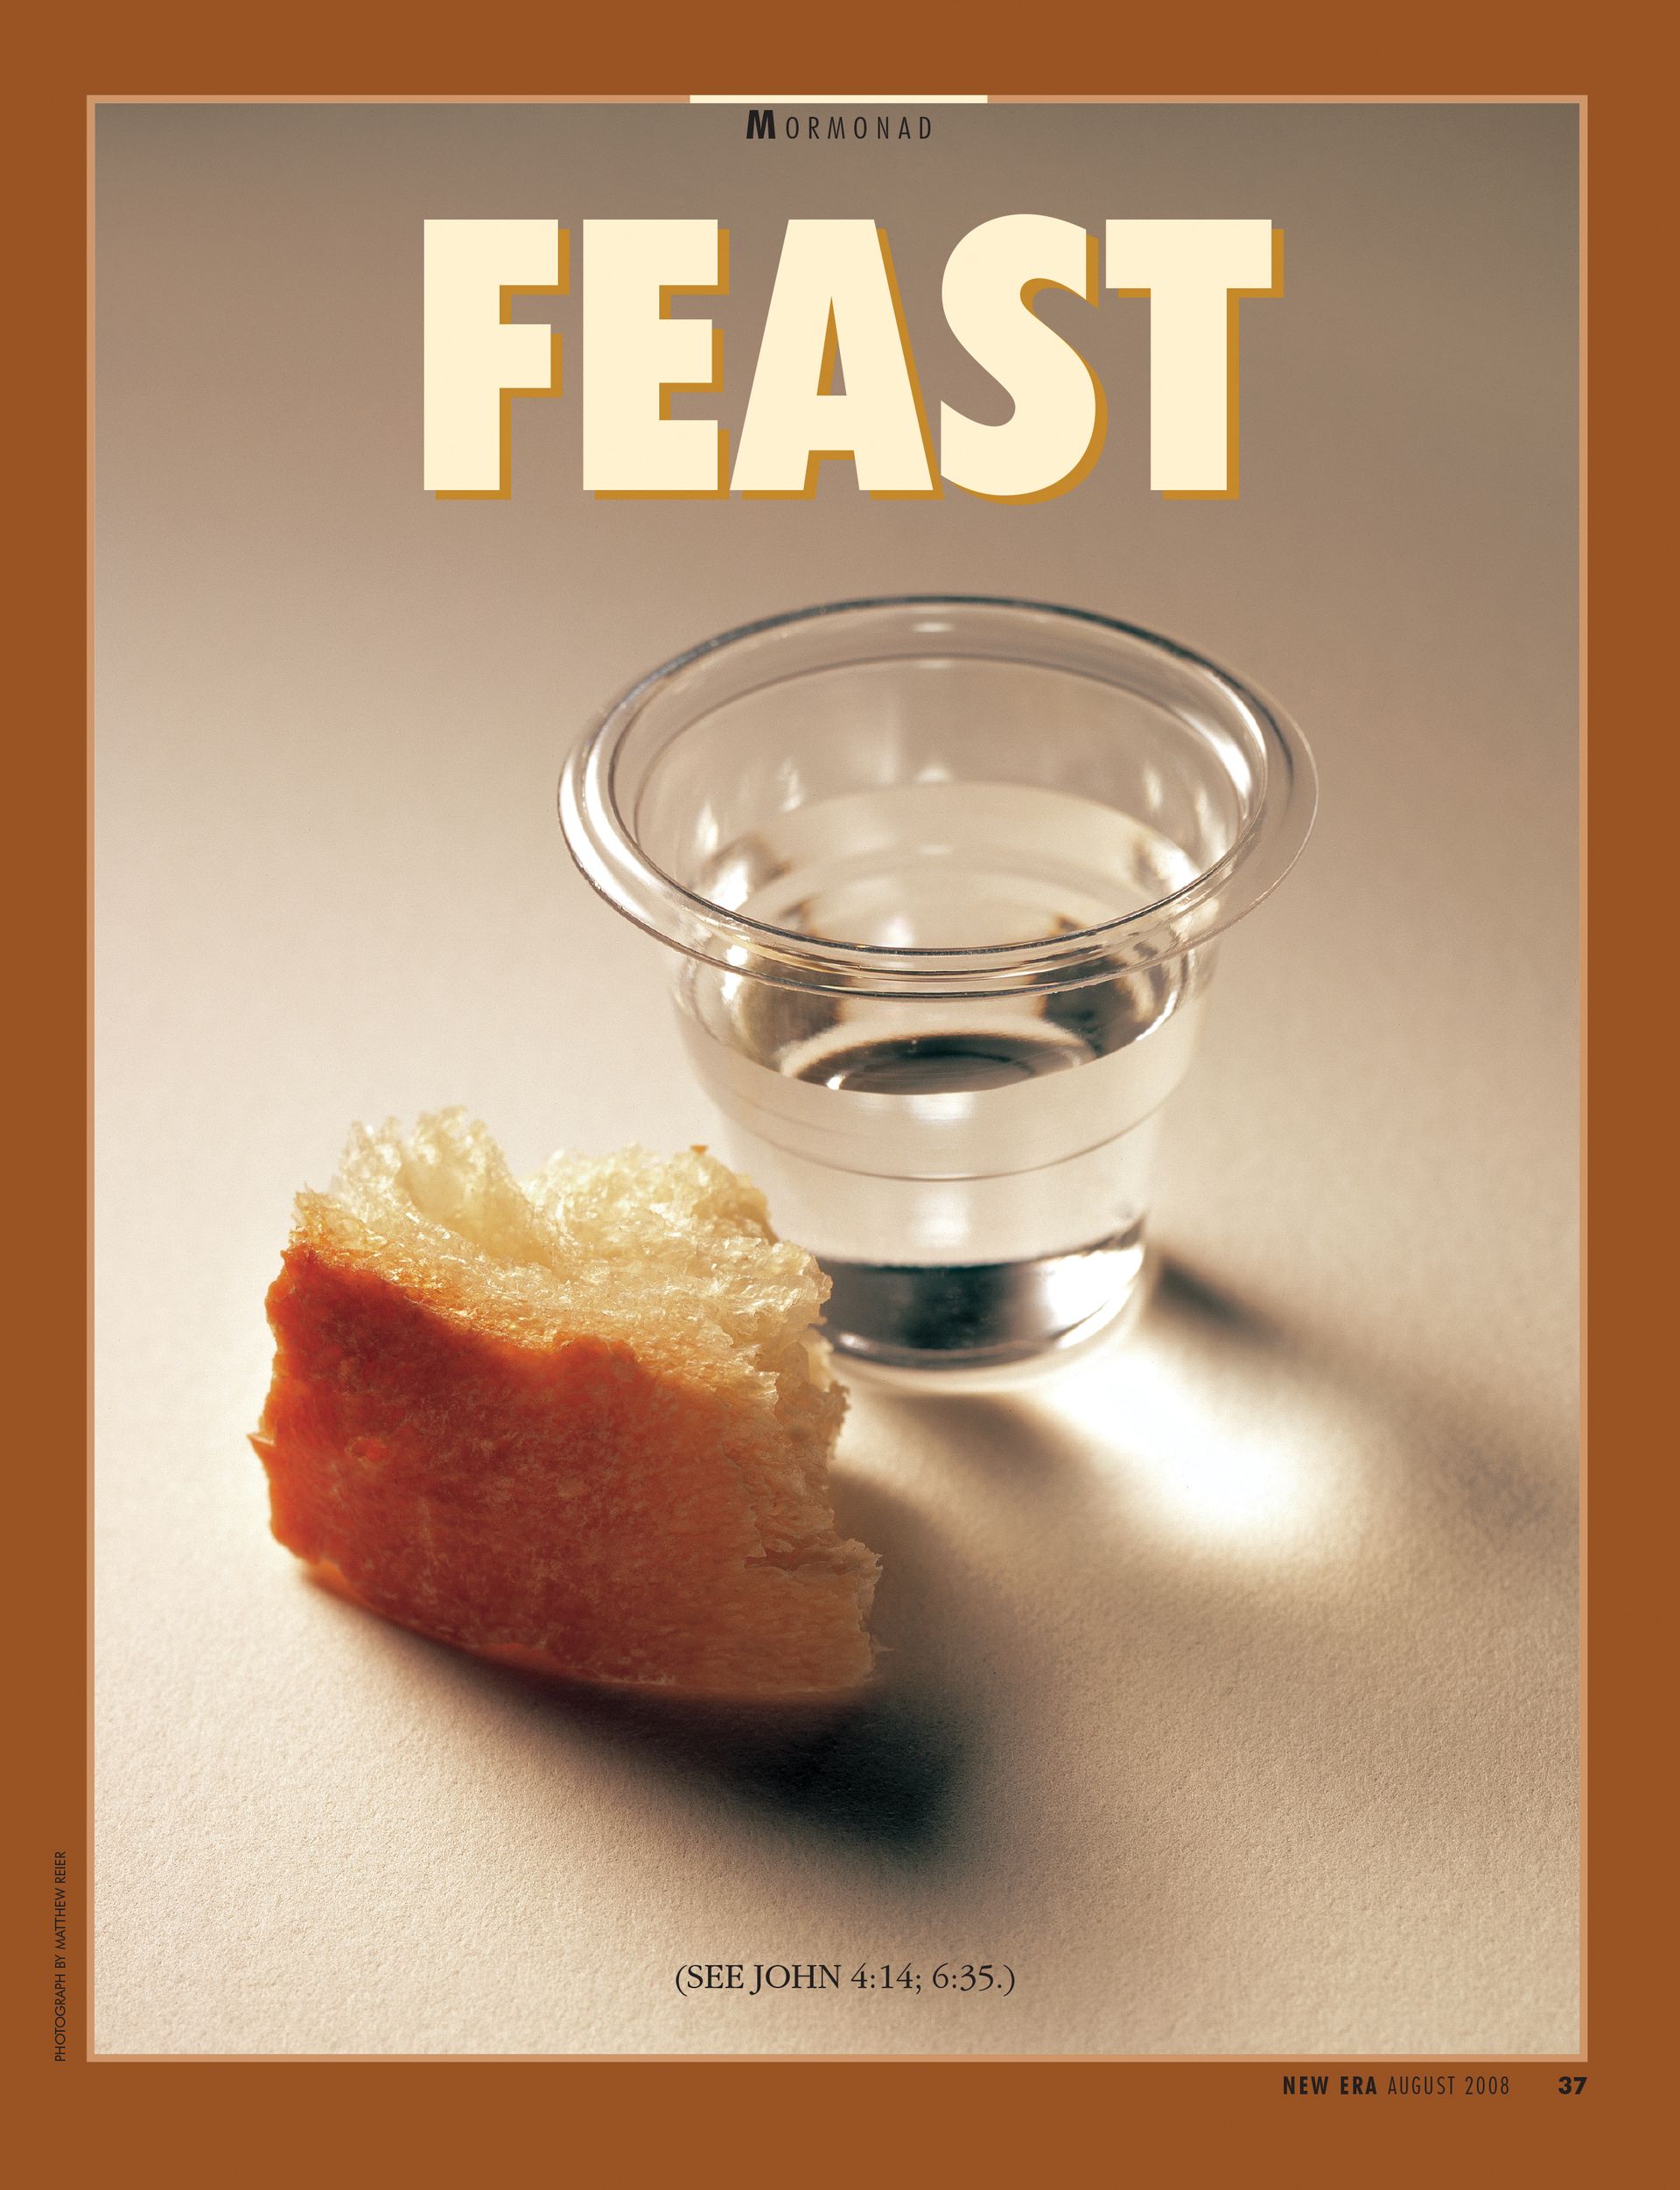 Feast. (See John 4:14, 6:35.) Aug. 2008 © undefined ipCode 1.